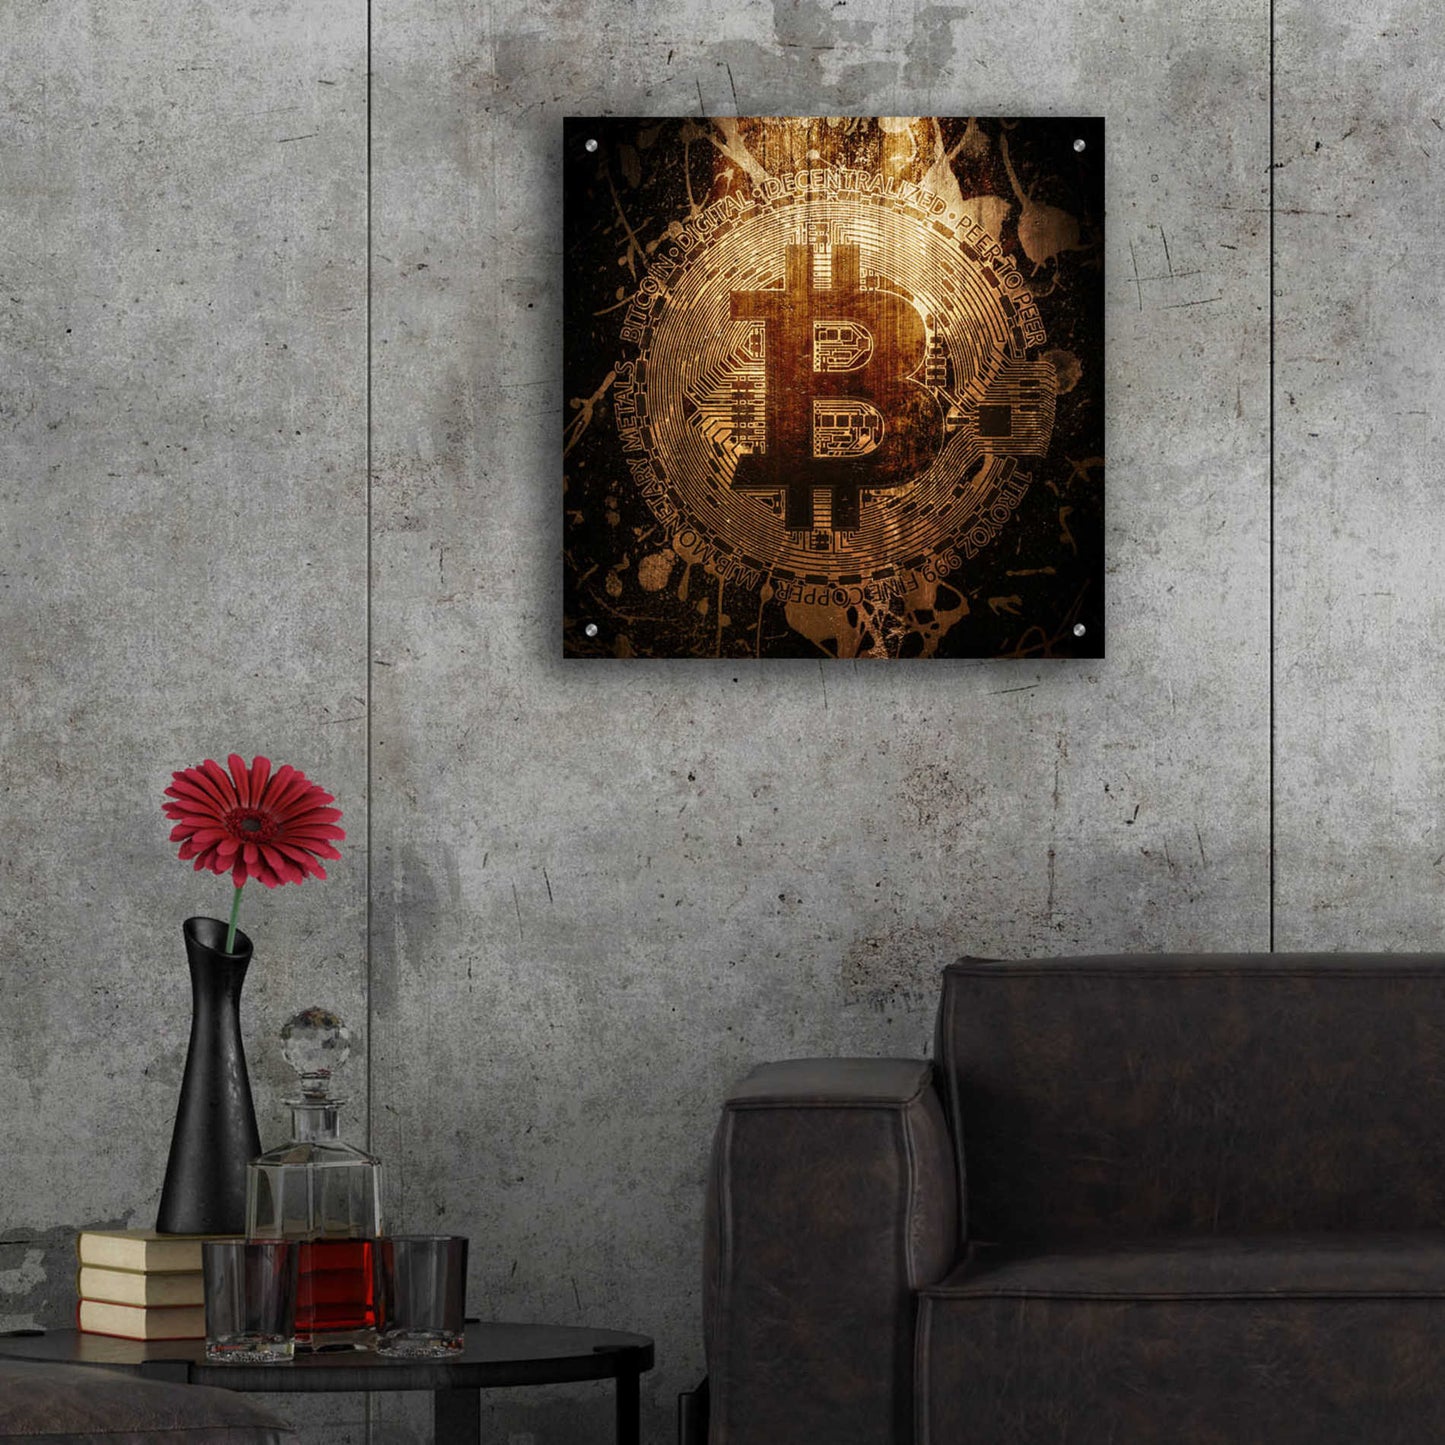 Epic Art 'Bitcoin Zinc' by Cameron Gray Acrylic Glass Wall Art,24x24